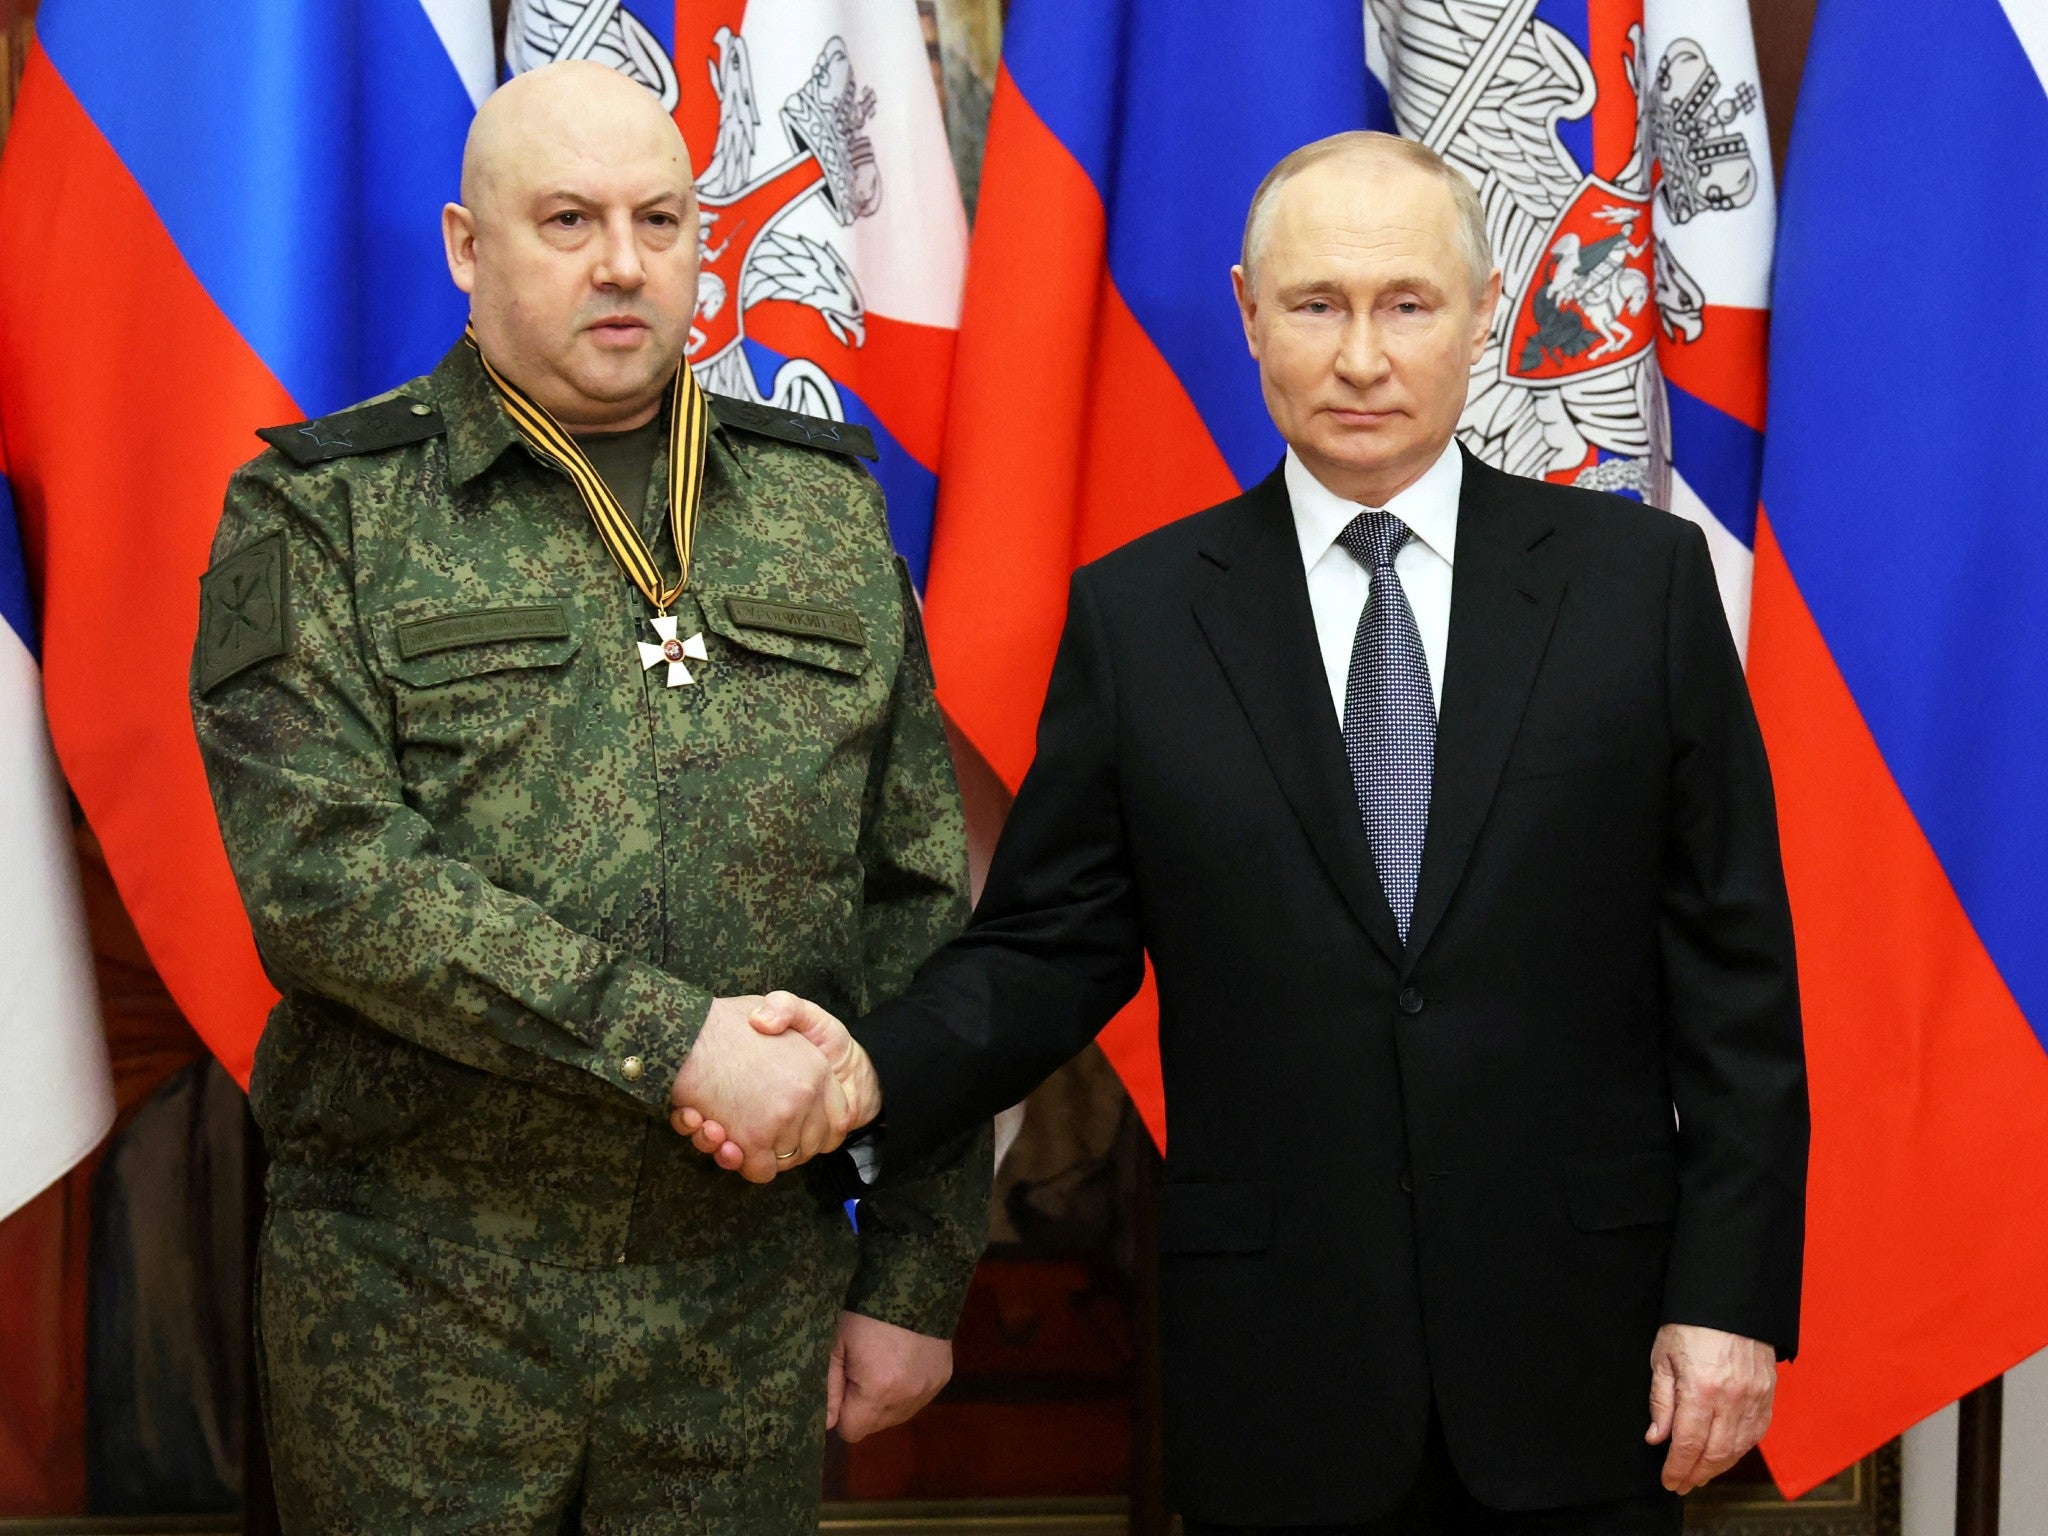 Russian president Vladimir Putin awards a medal to General Sergei Surovikin last December